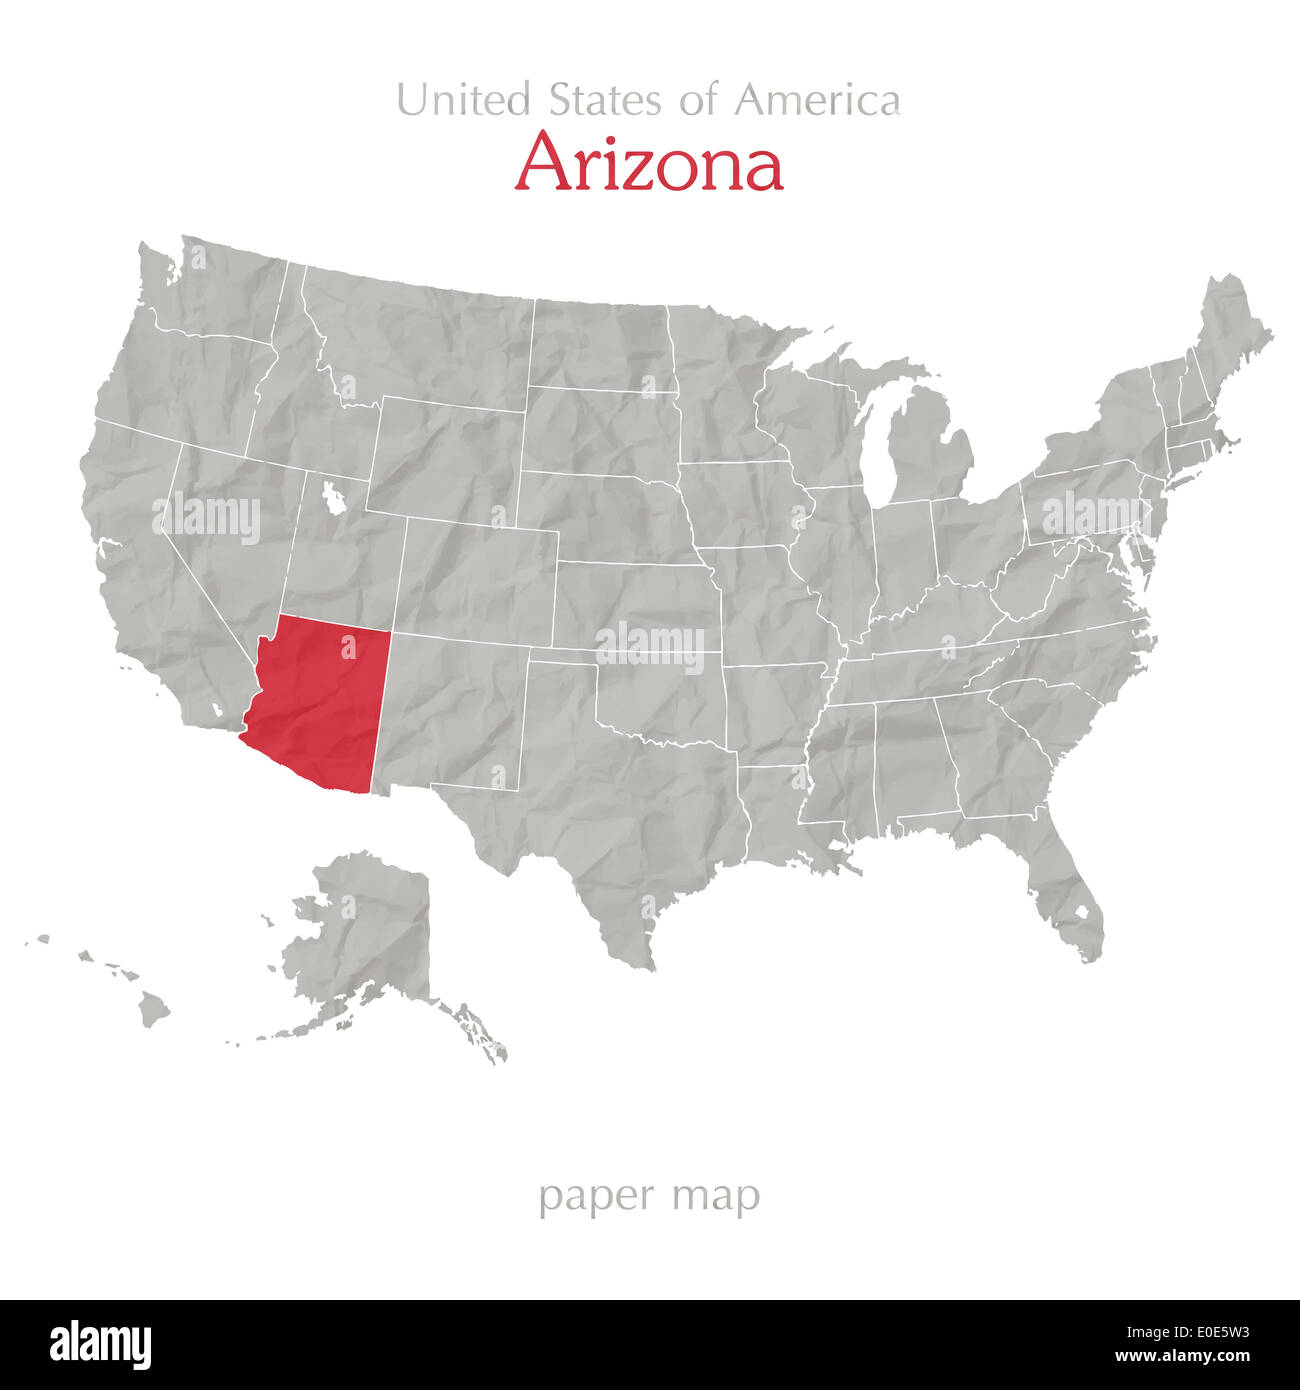 United States of America map and Arizona territory isolated on white background Stock Photo